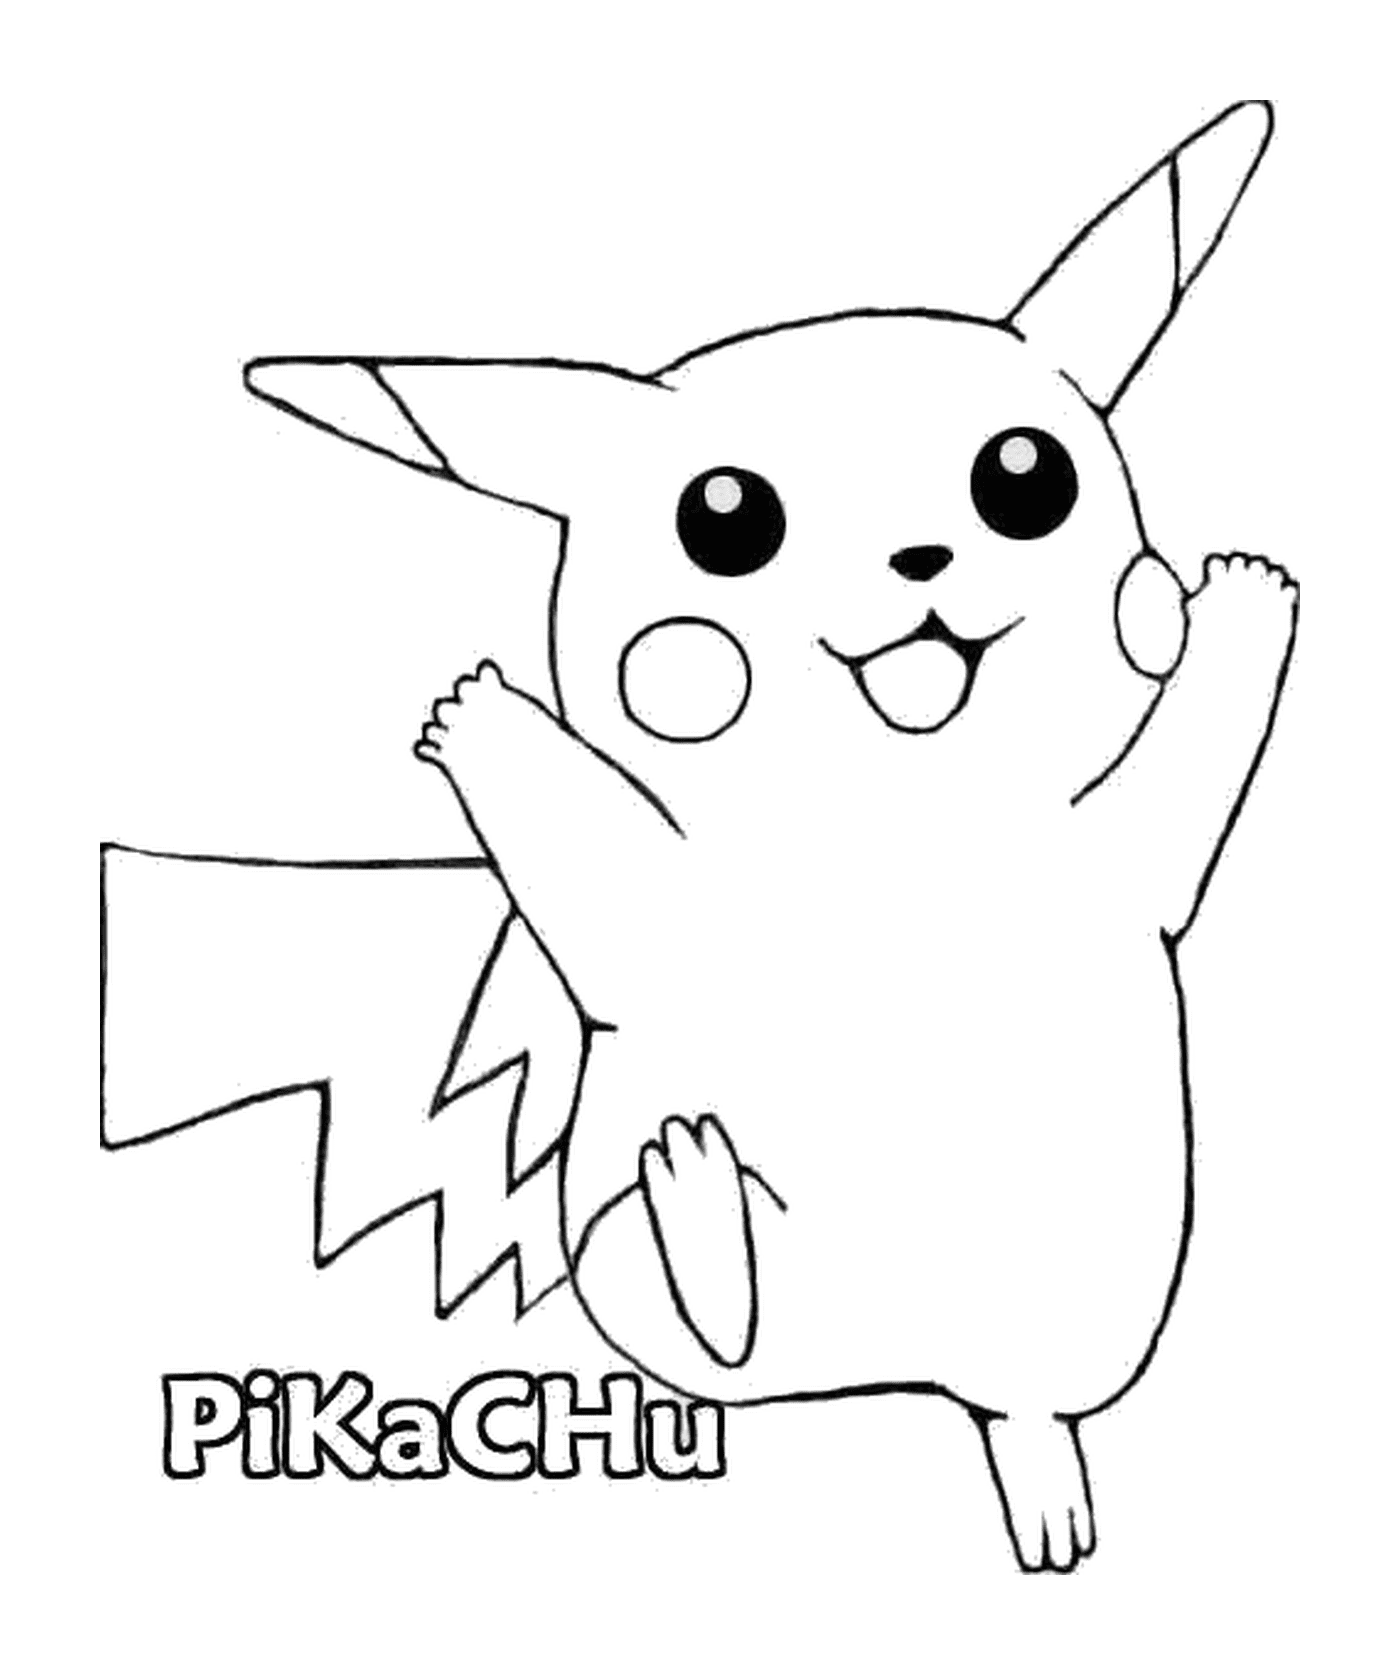  Pikachu : Adorable electric mouse 